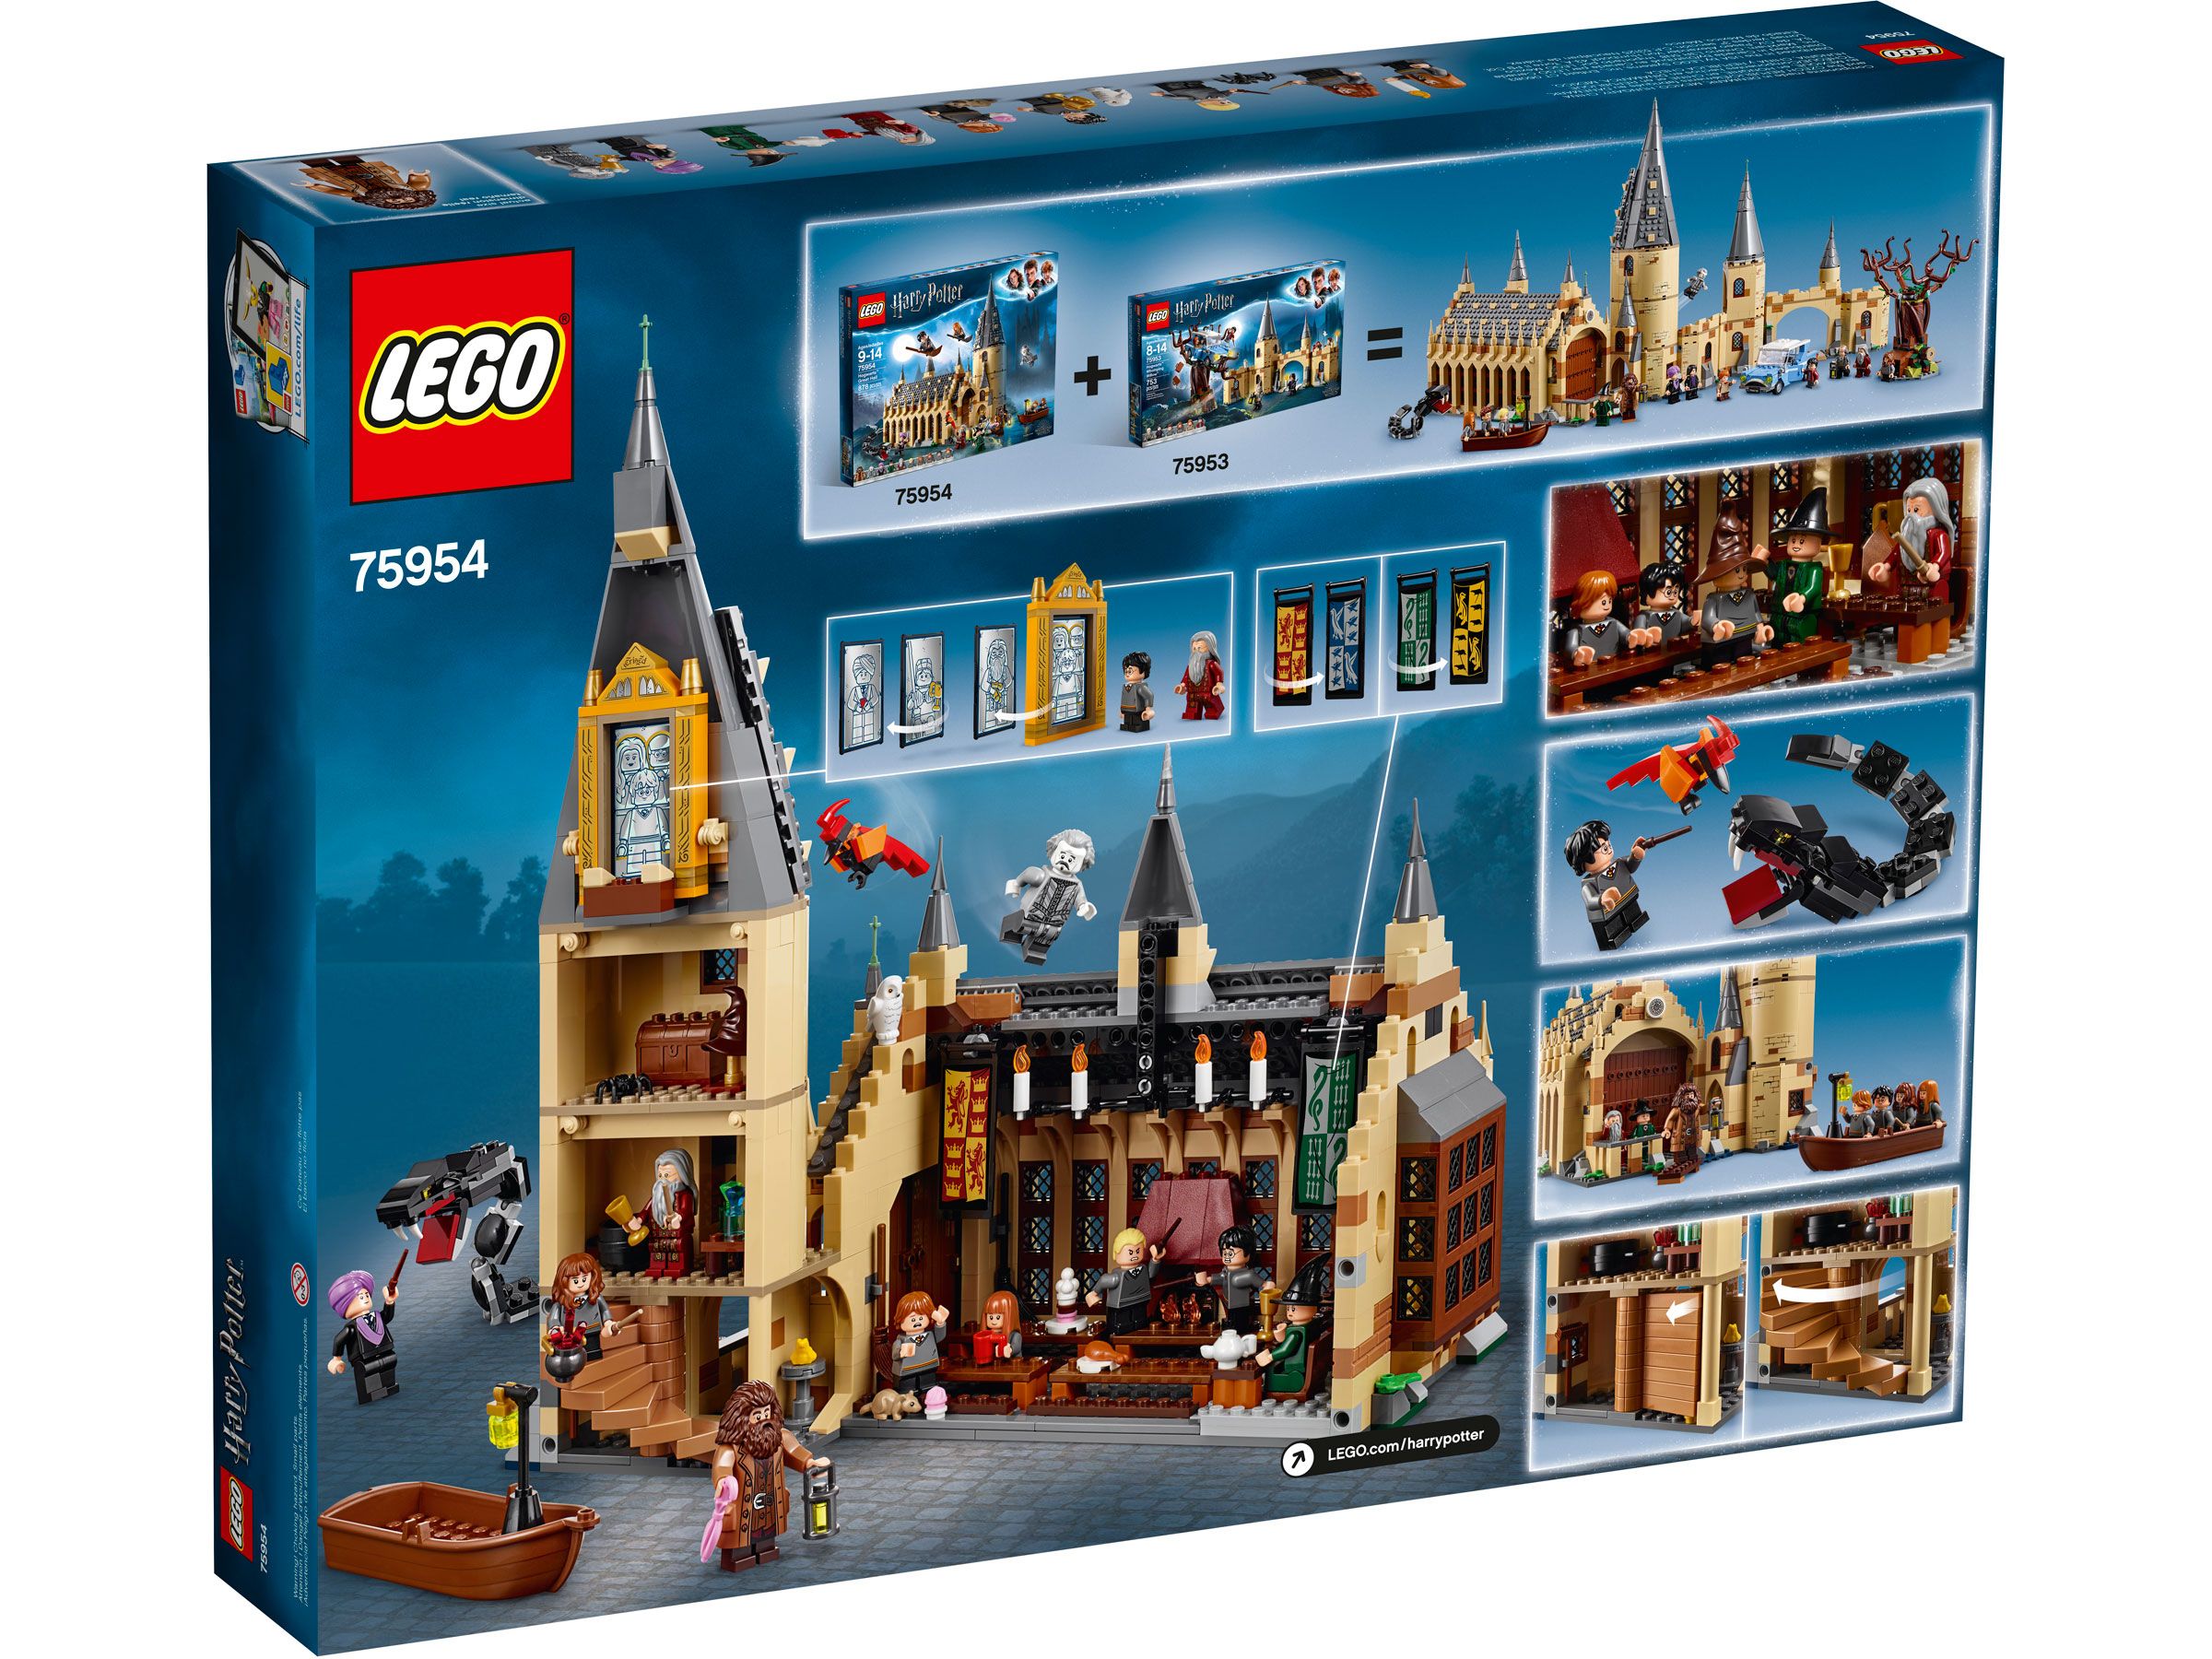 LEGO Harry Potter 75954 Die große Halle von Hogwarts LEGO_75954_Box5_v39.jpg